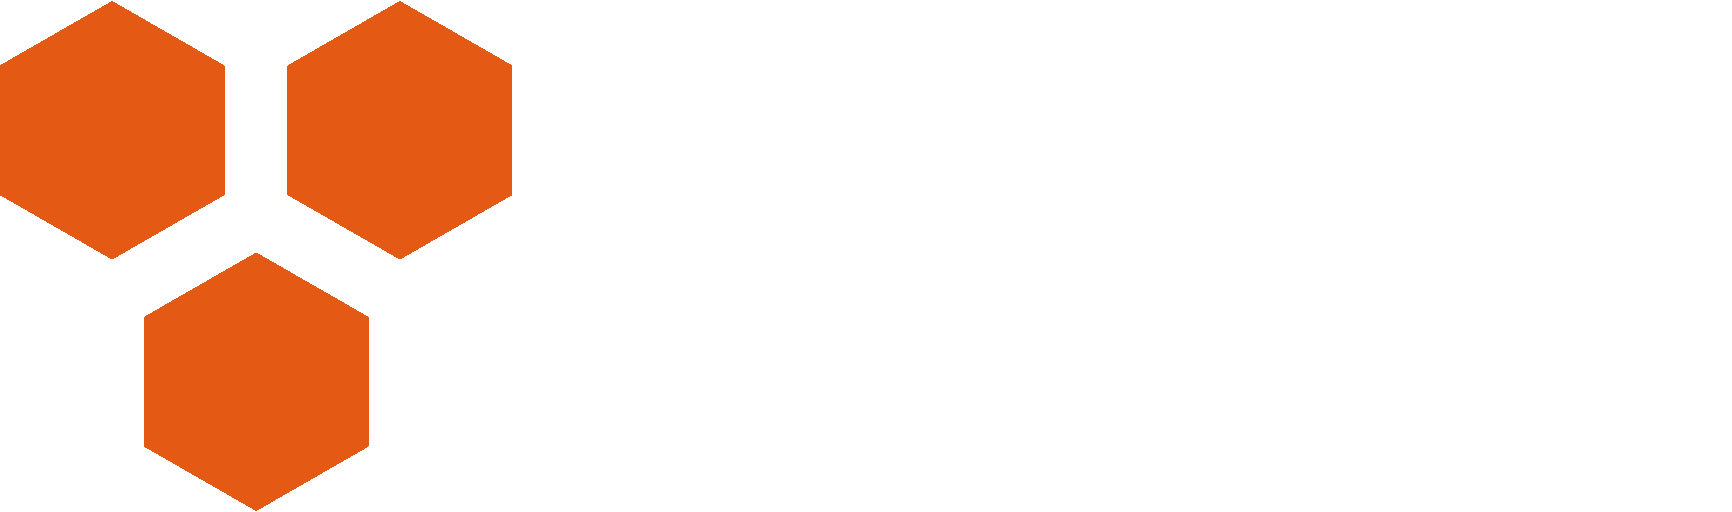 Technology - Awards